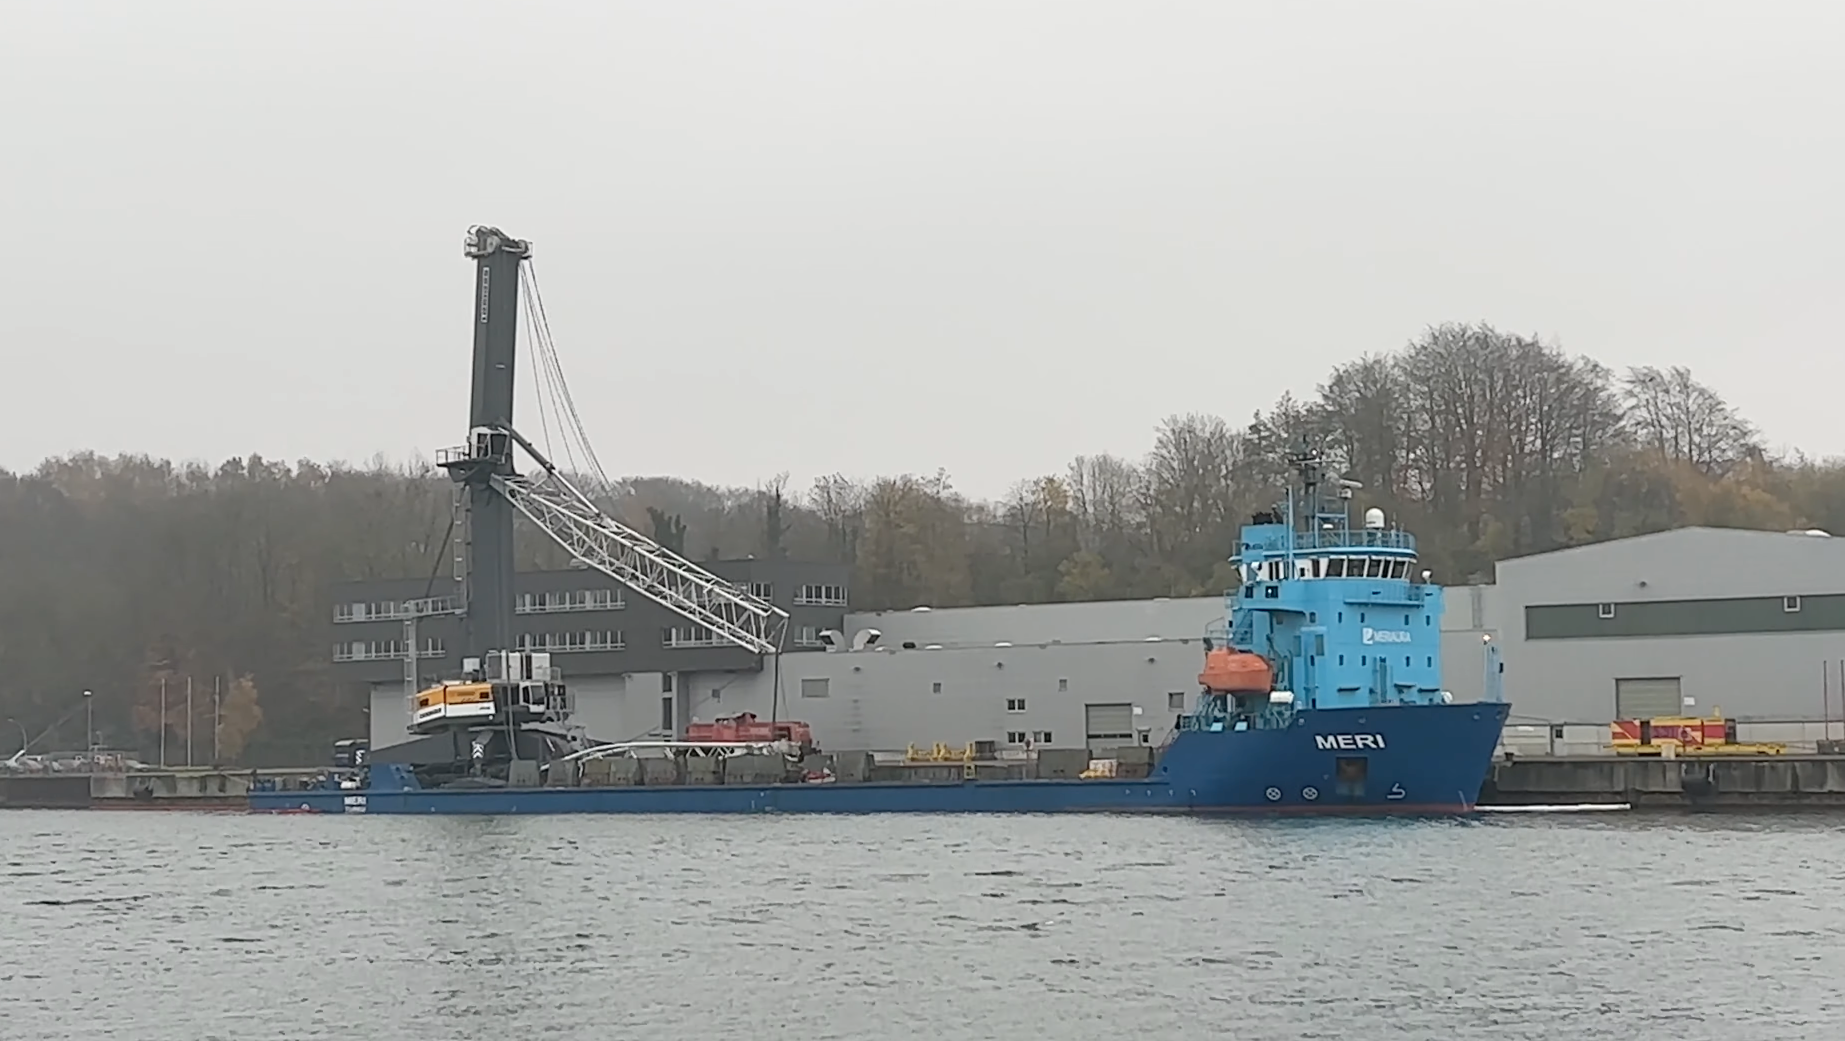 Kiel Canal closed as MV Meri rams Holtenau high bridges